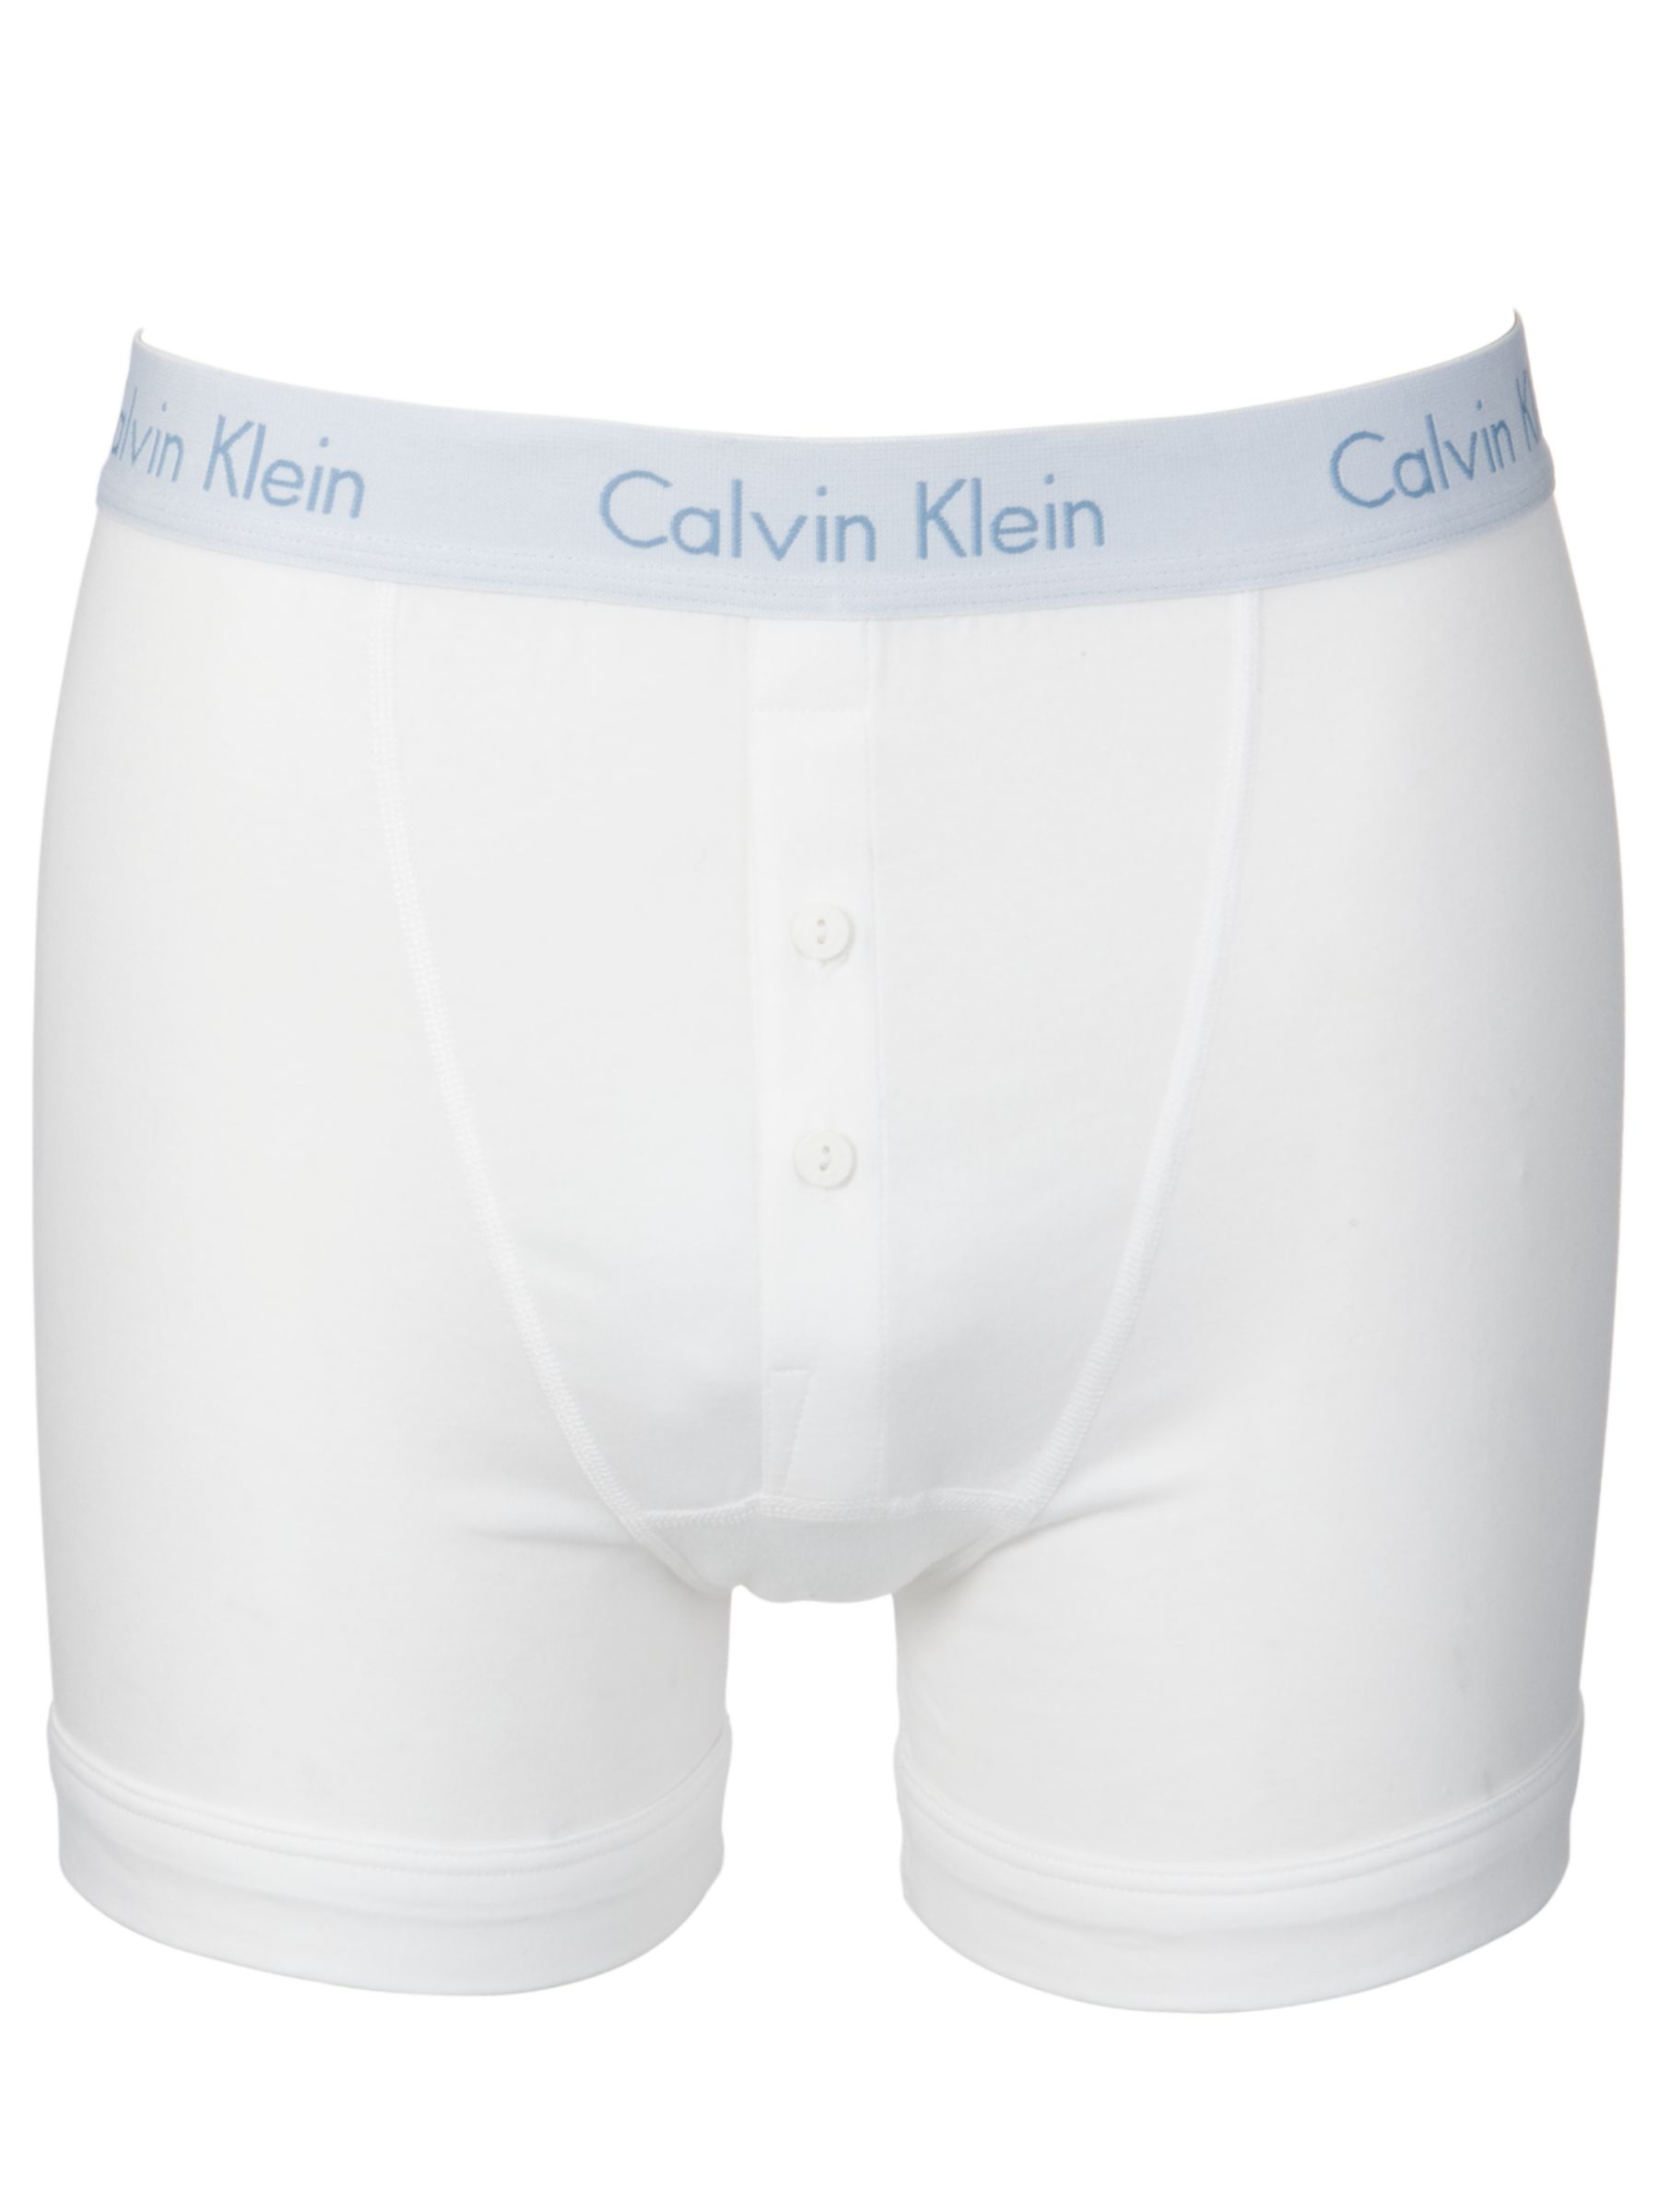 Calvin Klein Flexible Fit Cotton Trunks, White, Large